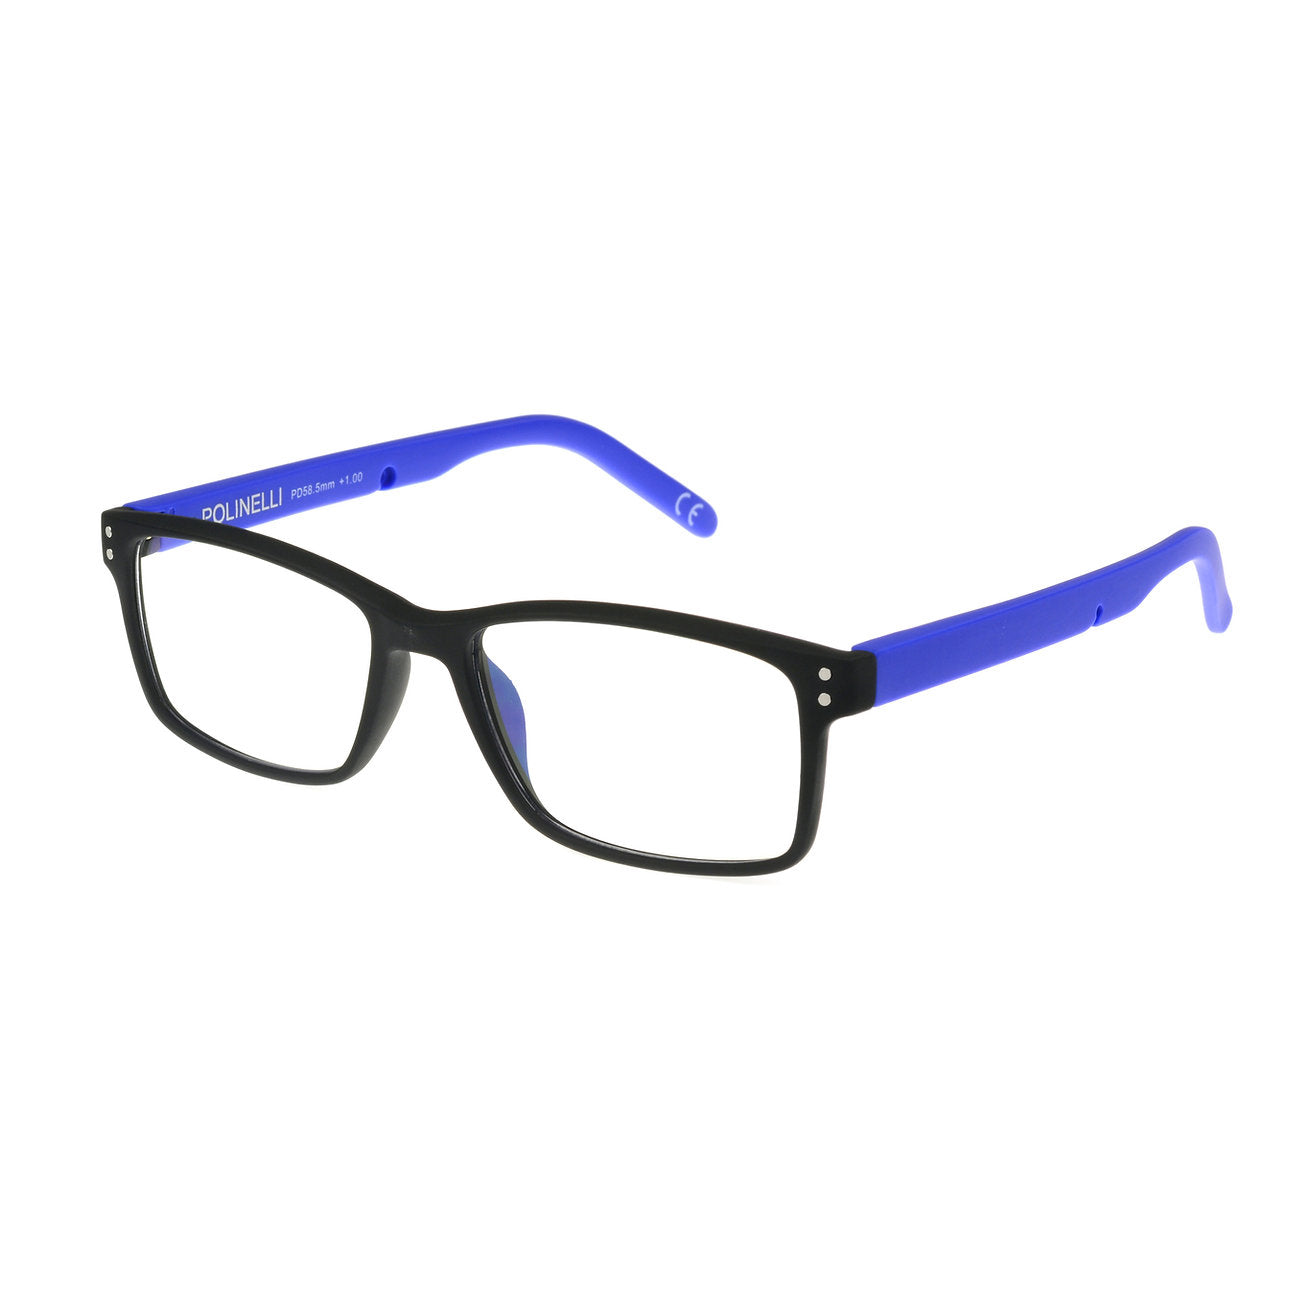 Polinelli eyeglasses model P100 blue